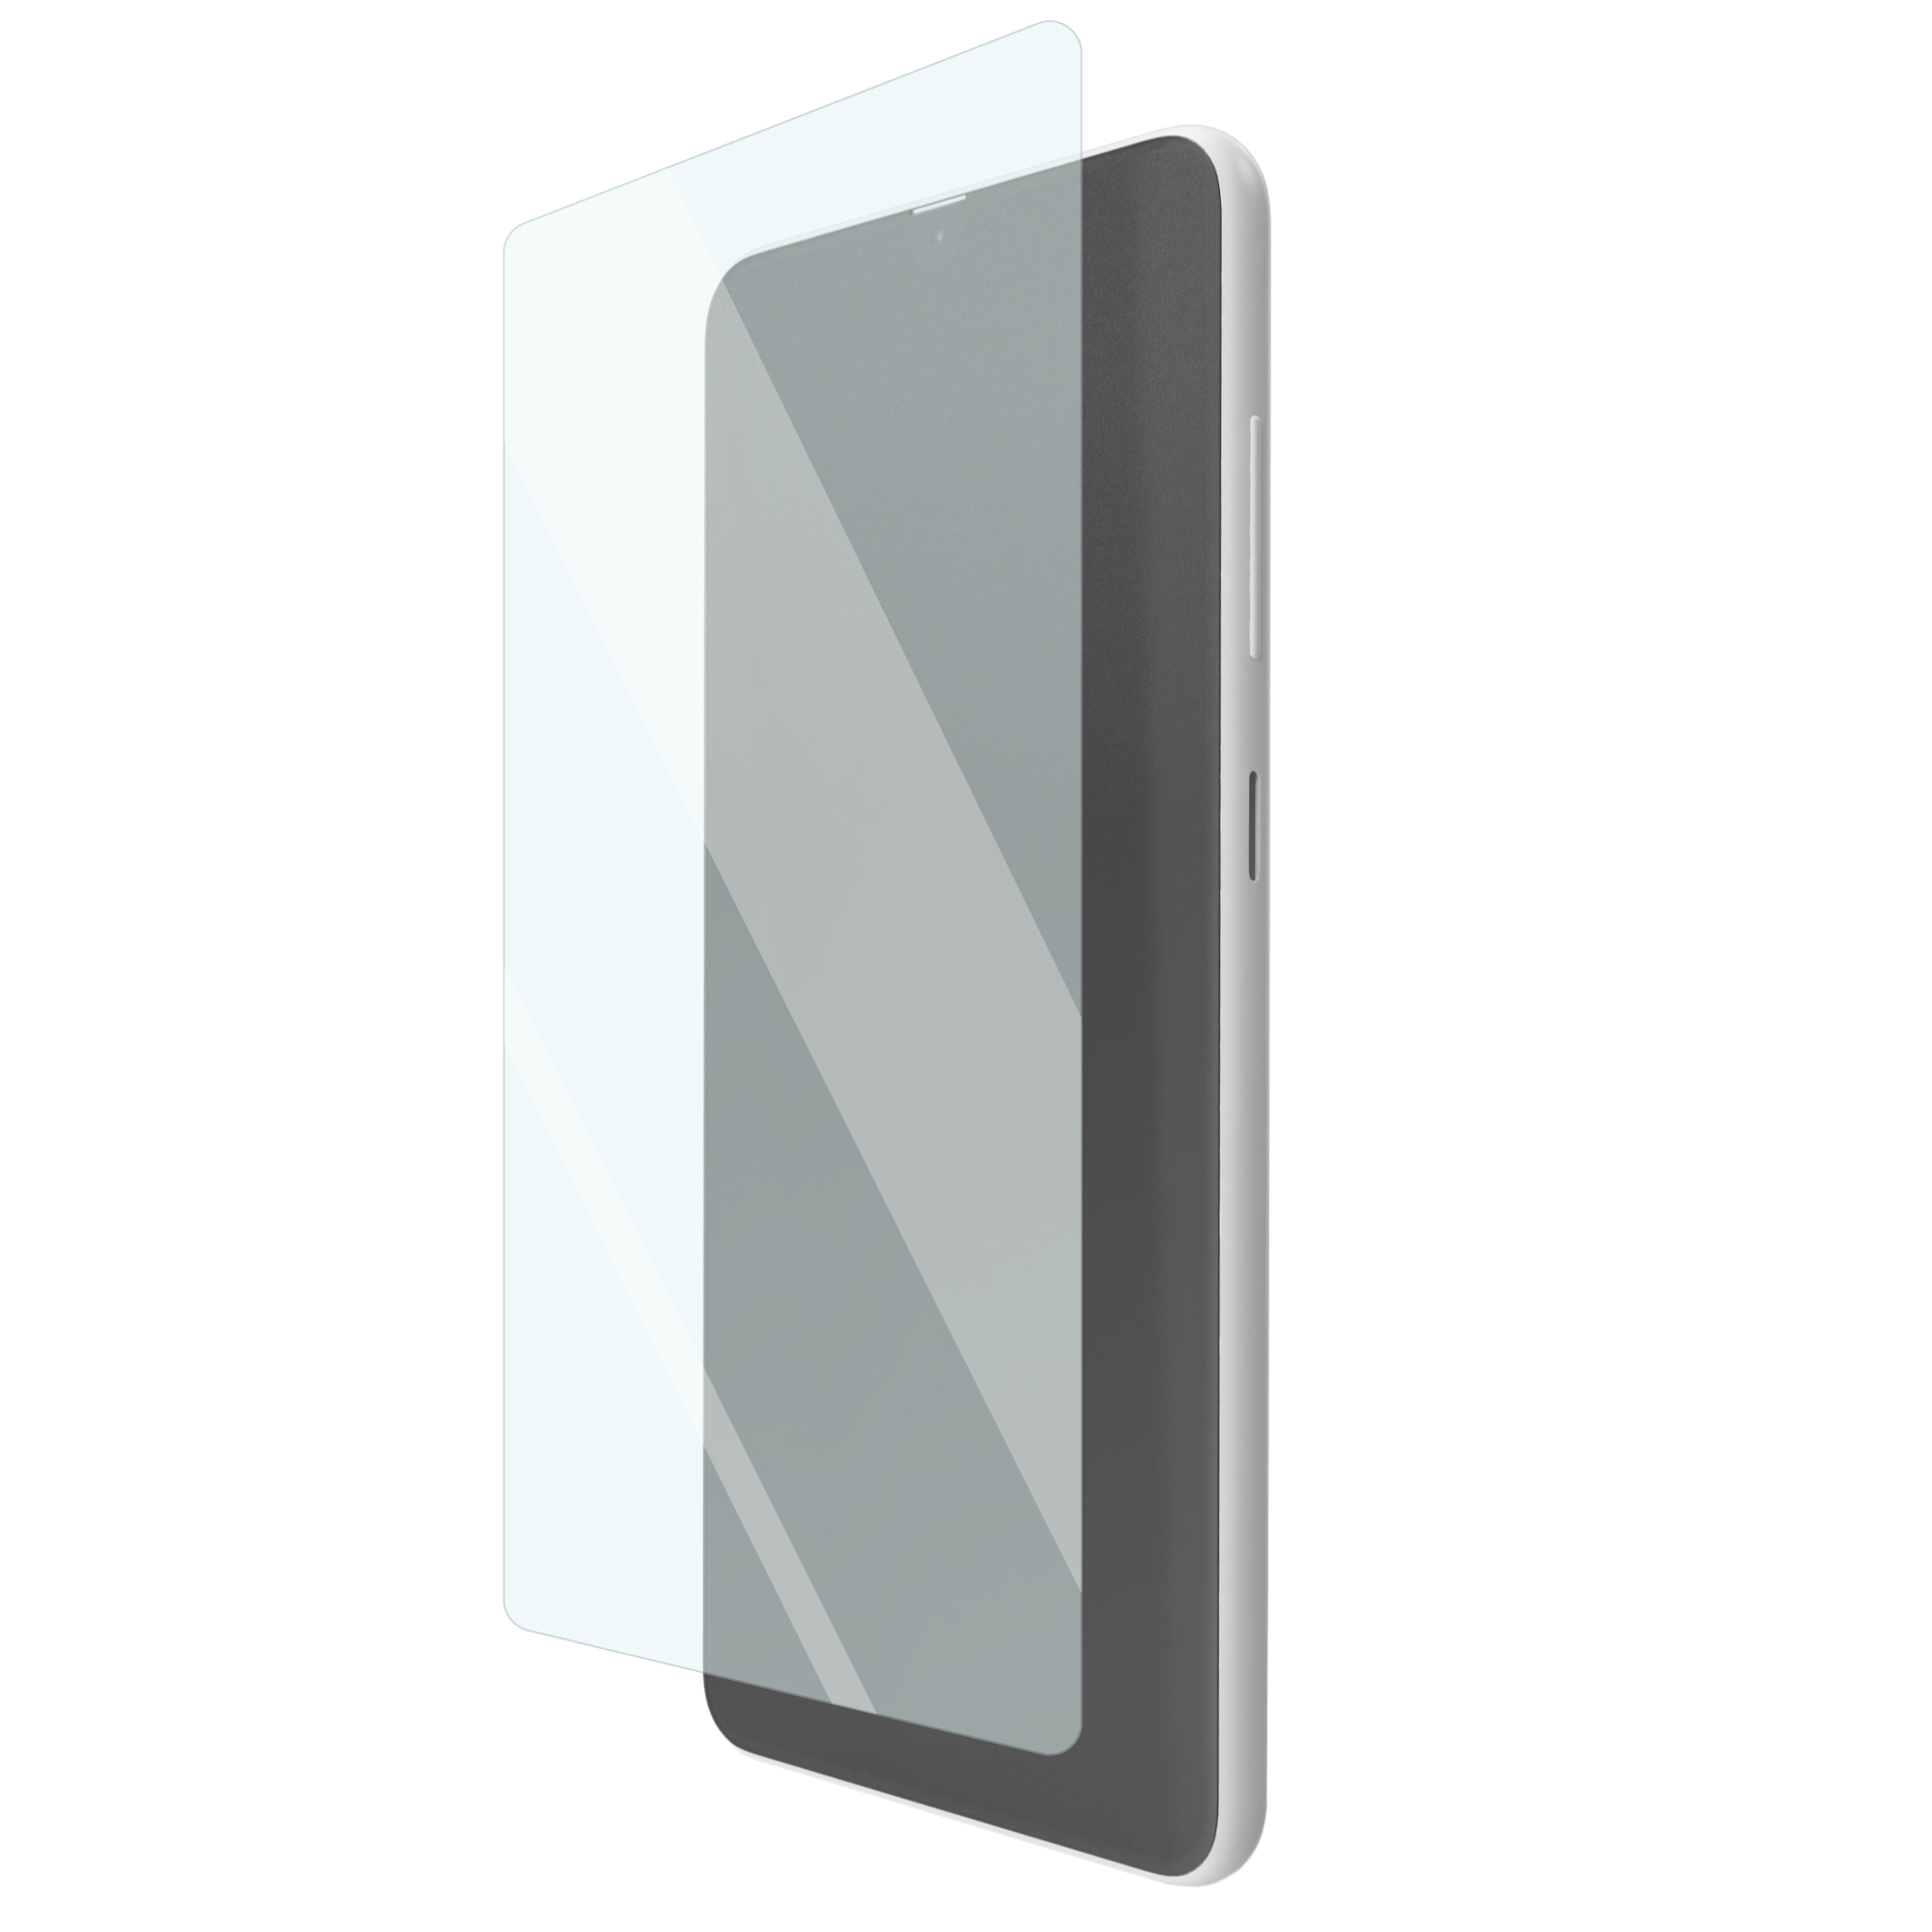 Folie de protectie silicon ShieldUP HiTech Regenerable pentru Apple iPhone 6 Plus thumb